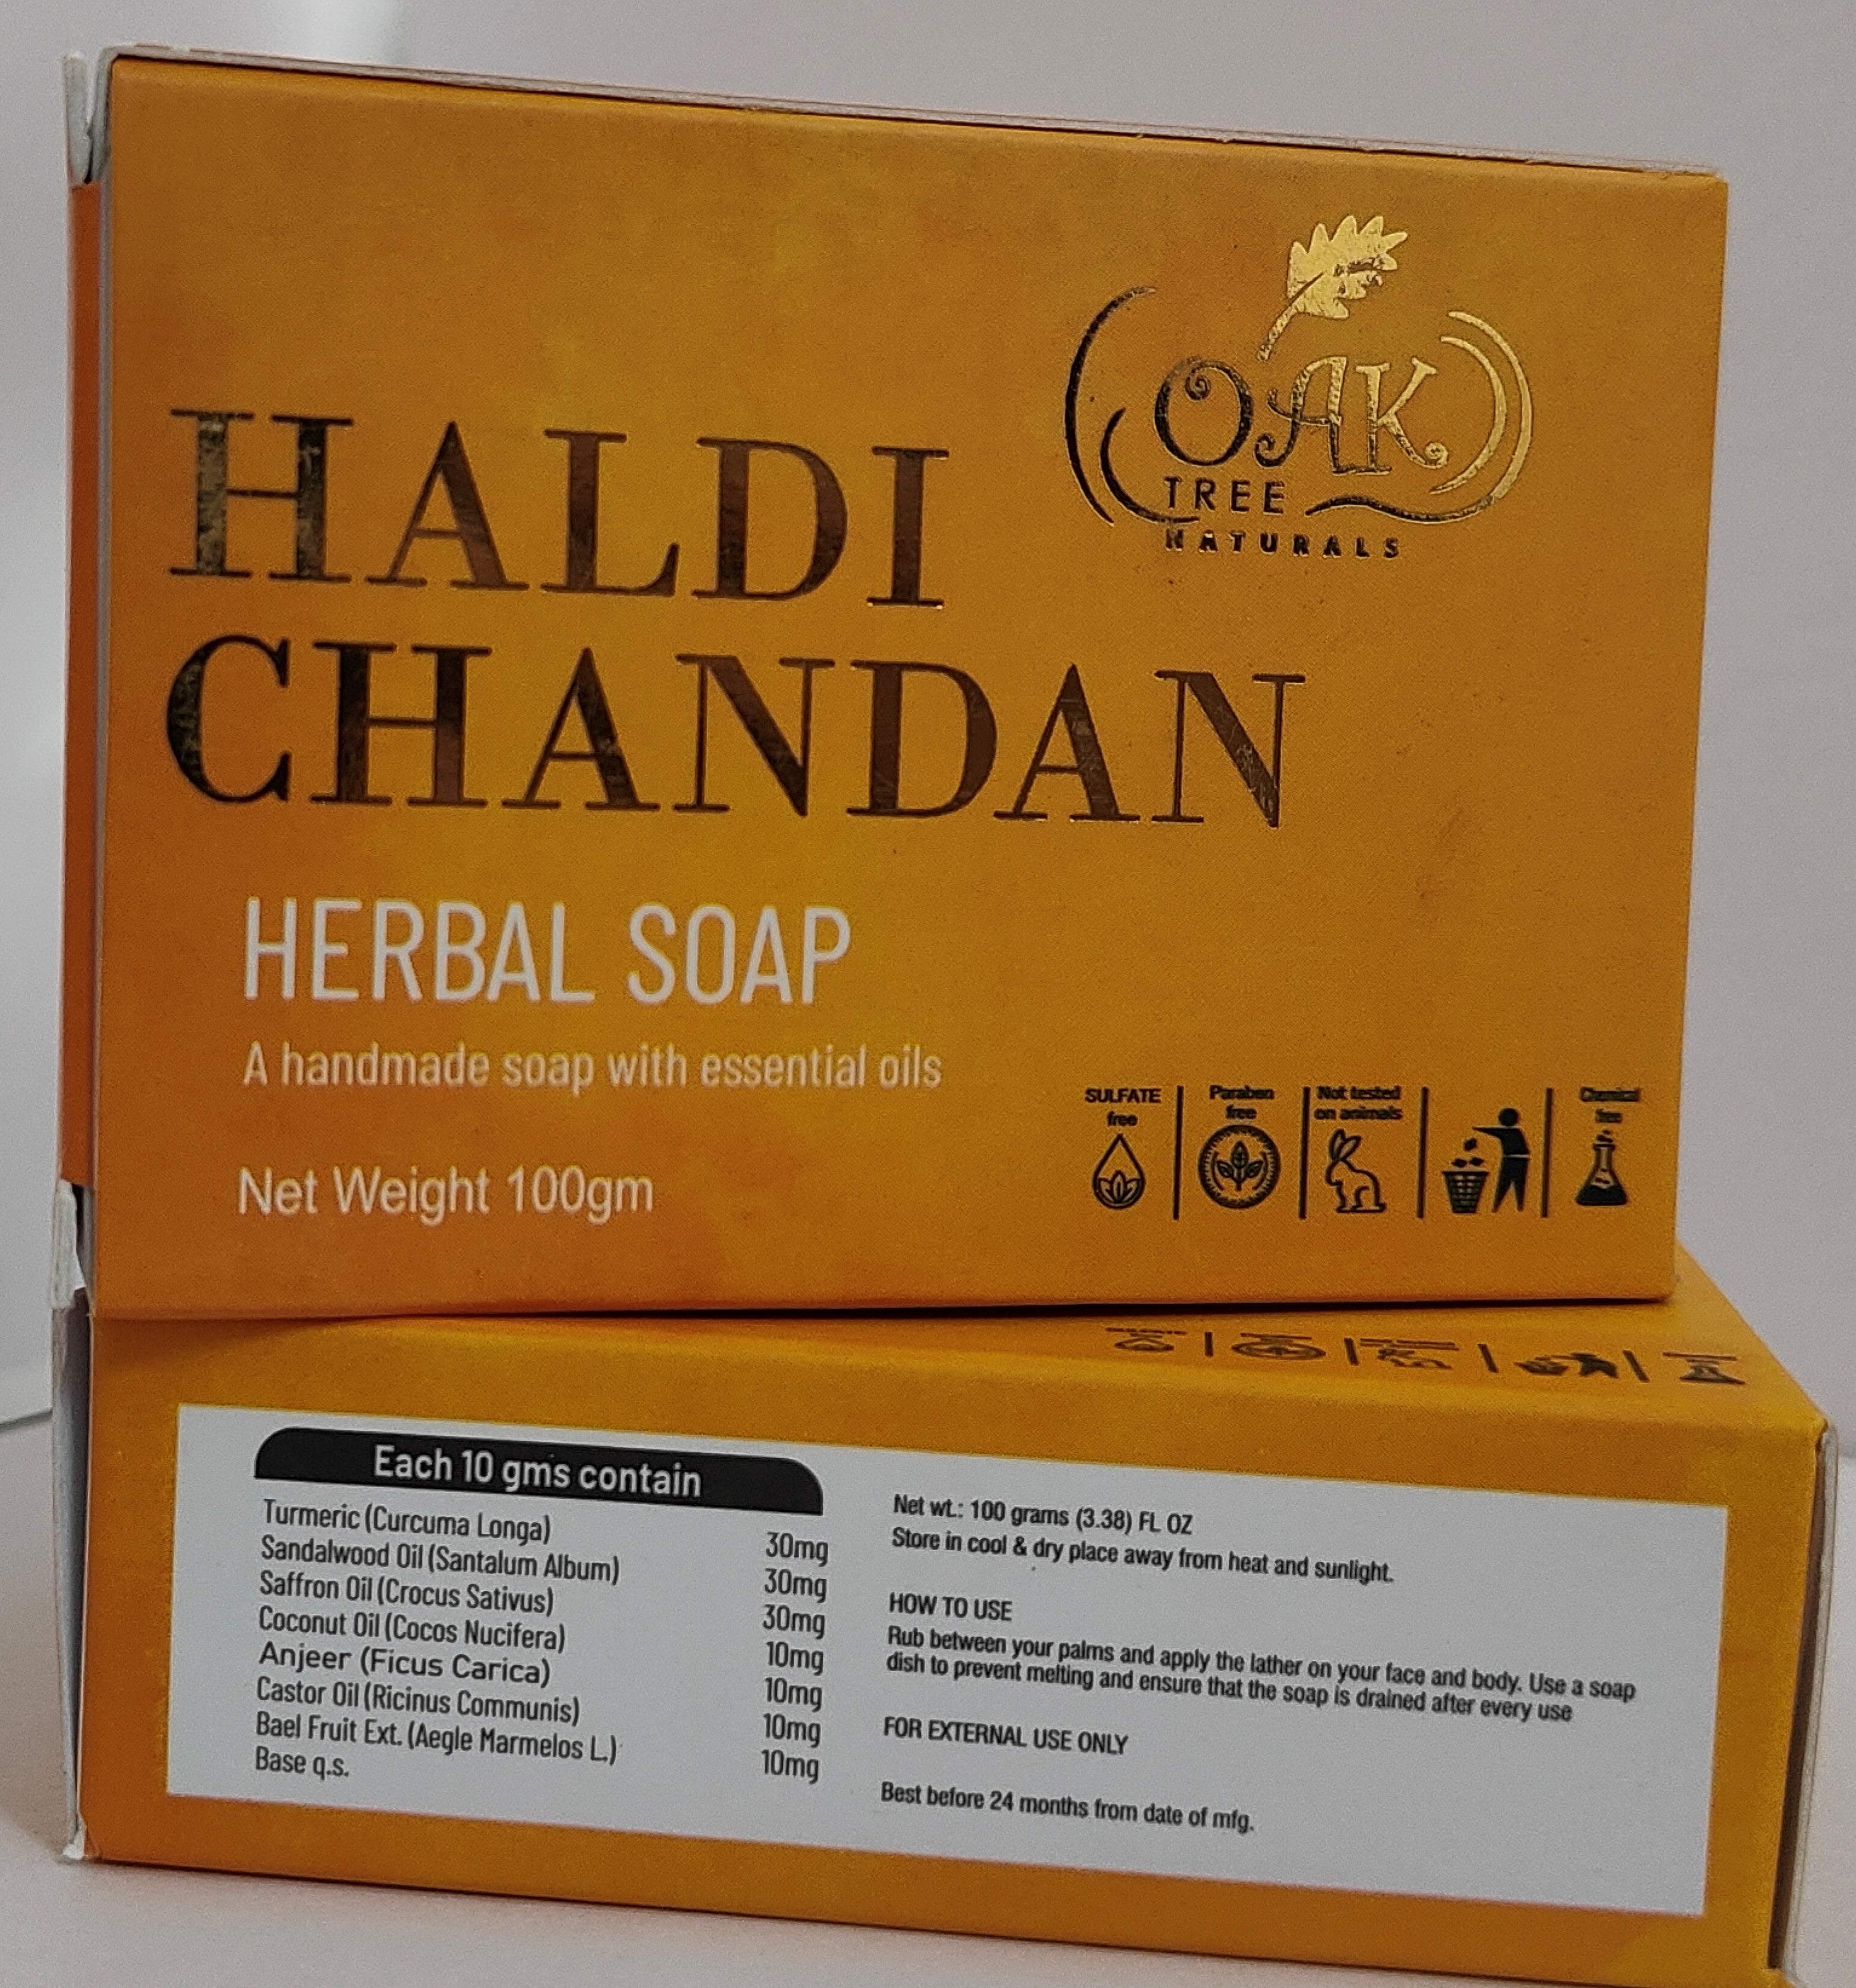 Under Eye Cream & Haldi Chandan Herbal Soap